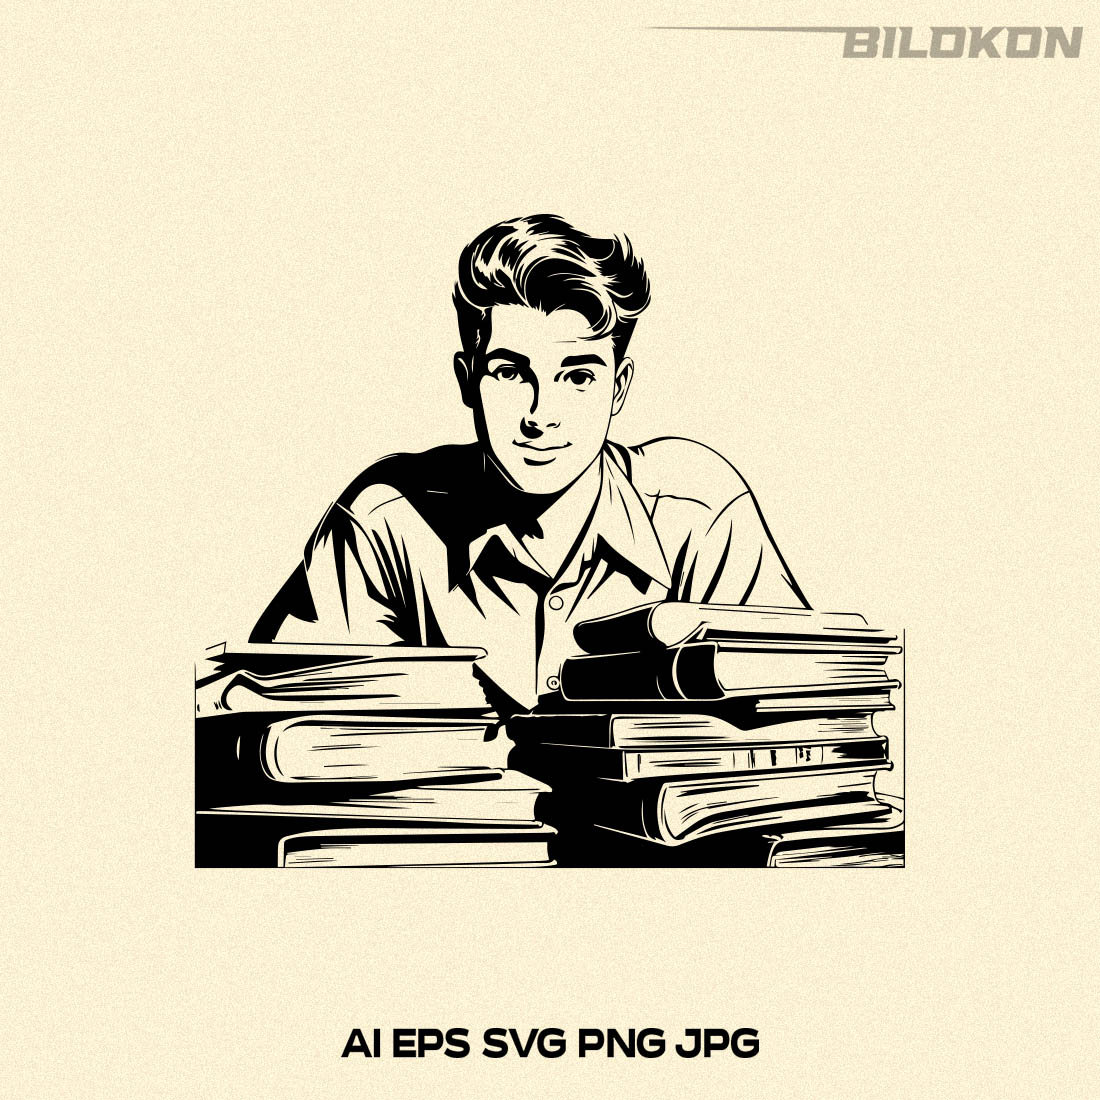 Vintage boy reads books, boy studies at school, SVG Vector cover image.